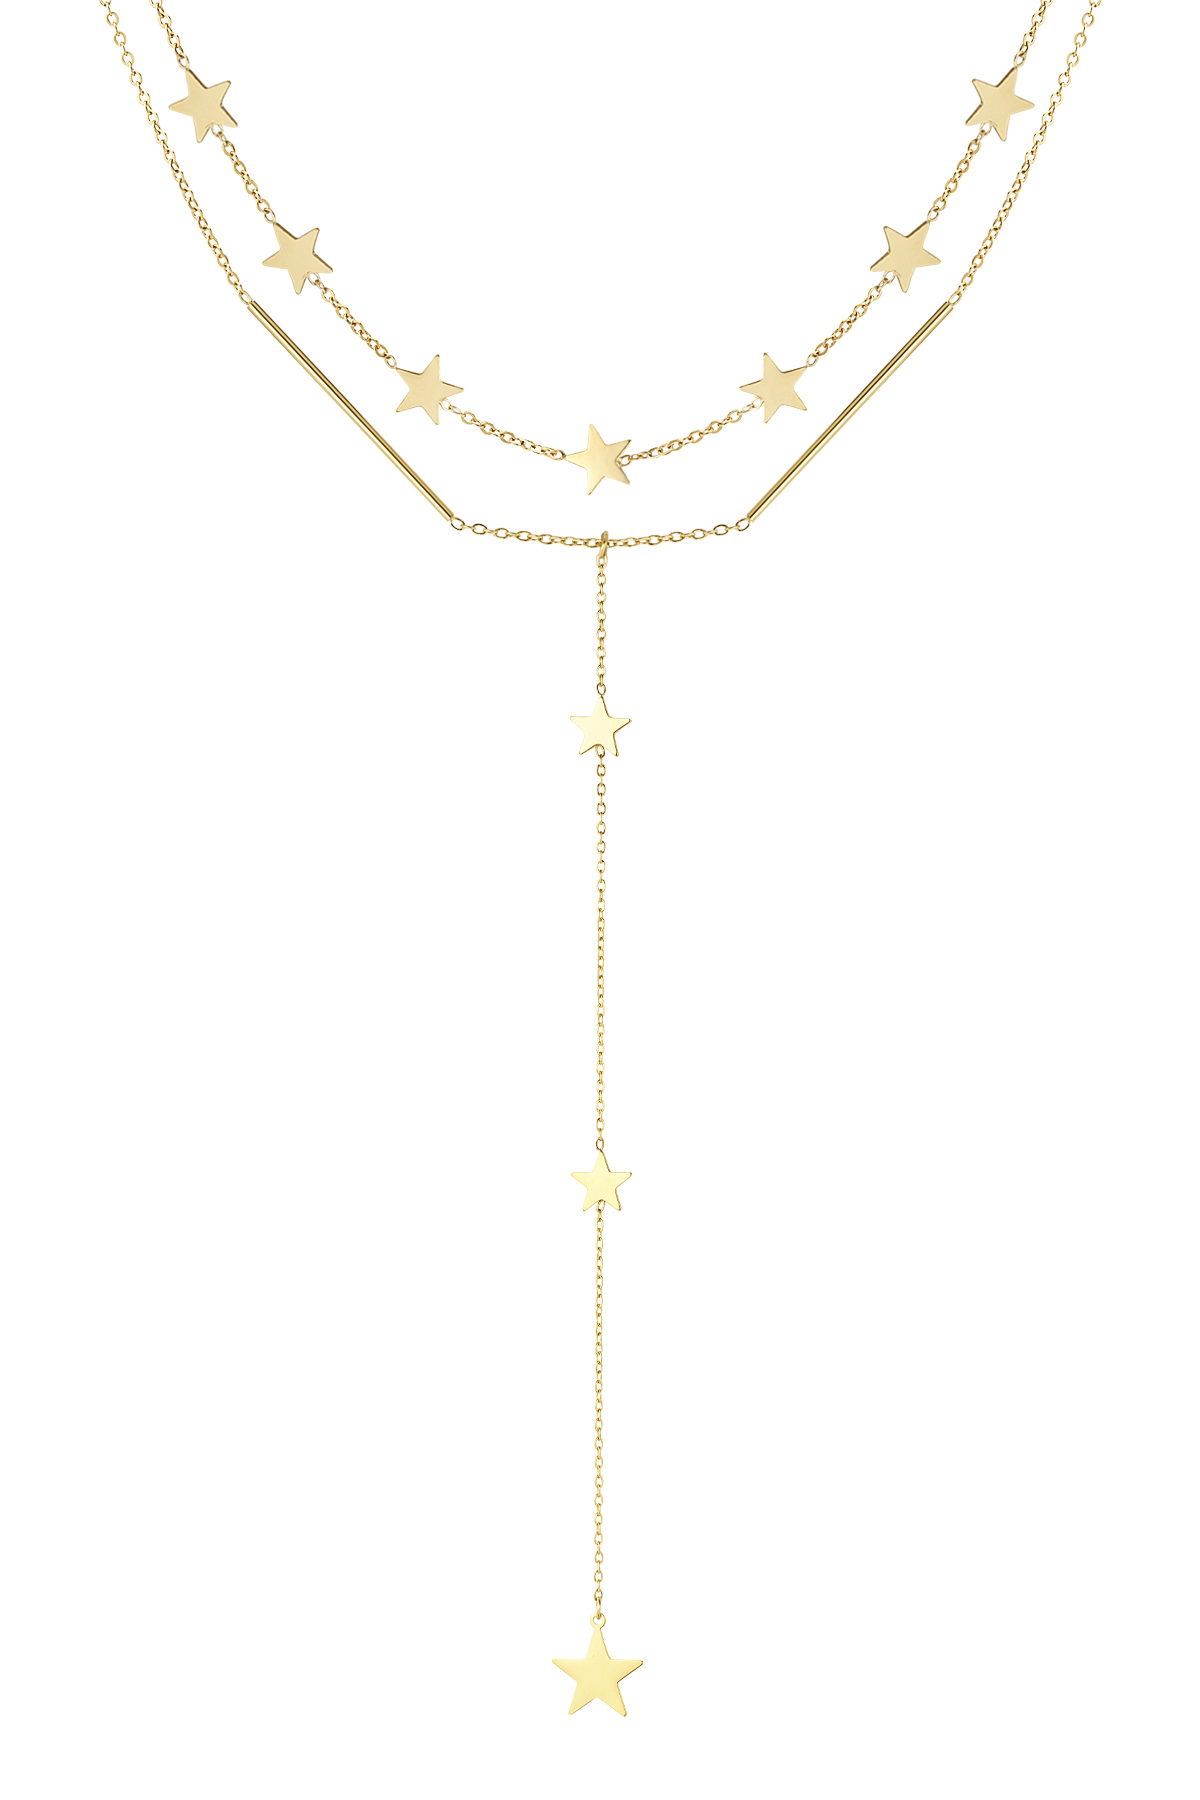 Necklace center piece stars - gold